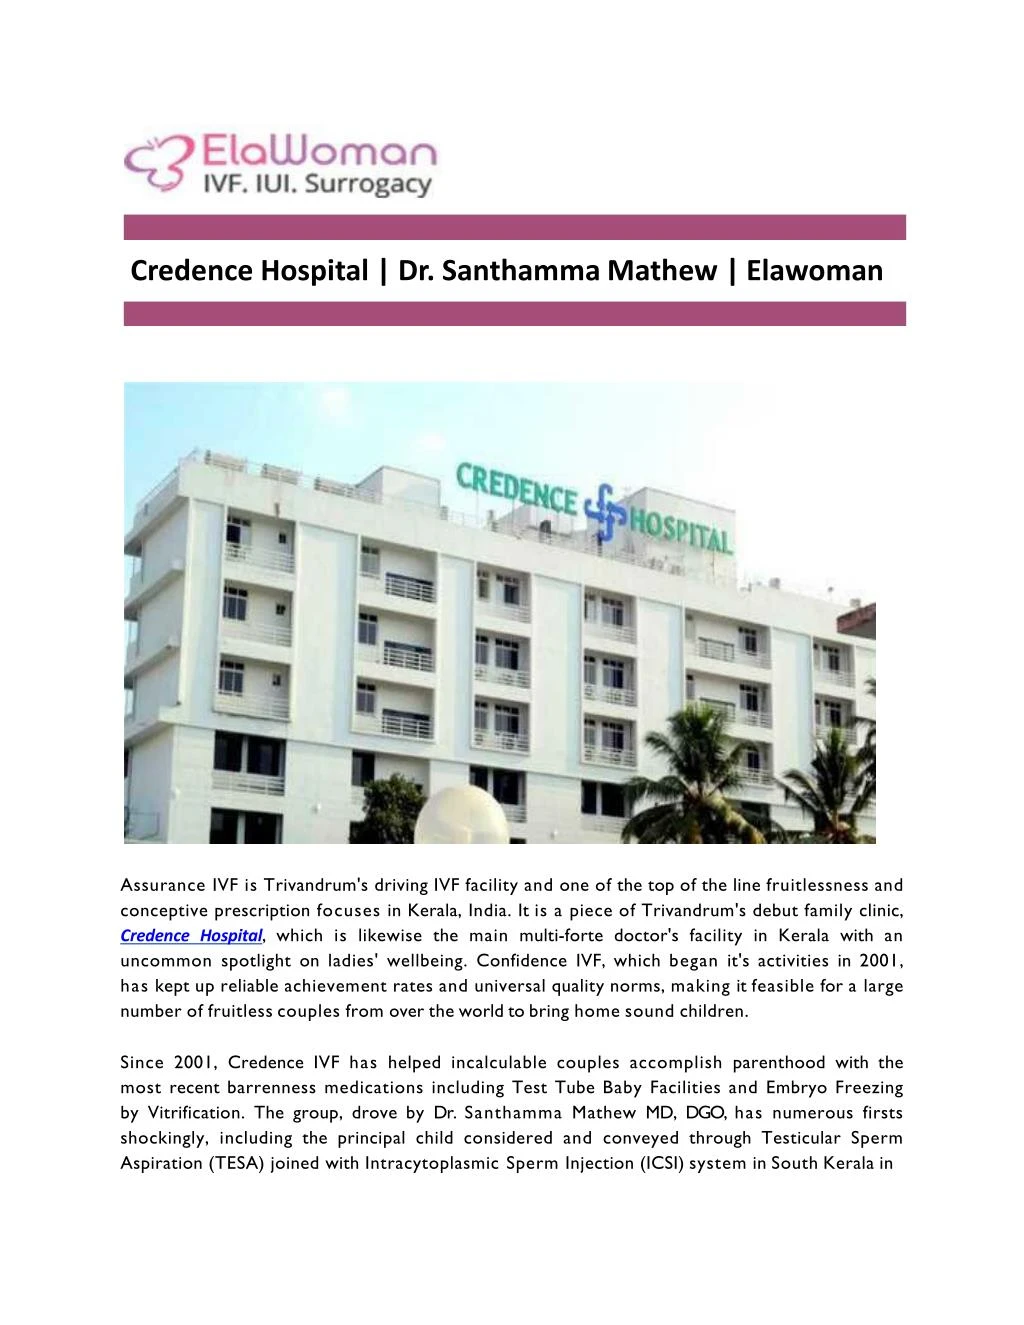 credence hospital dr santhamma mathew elawoman